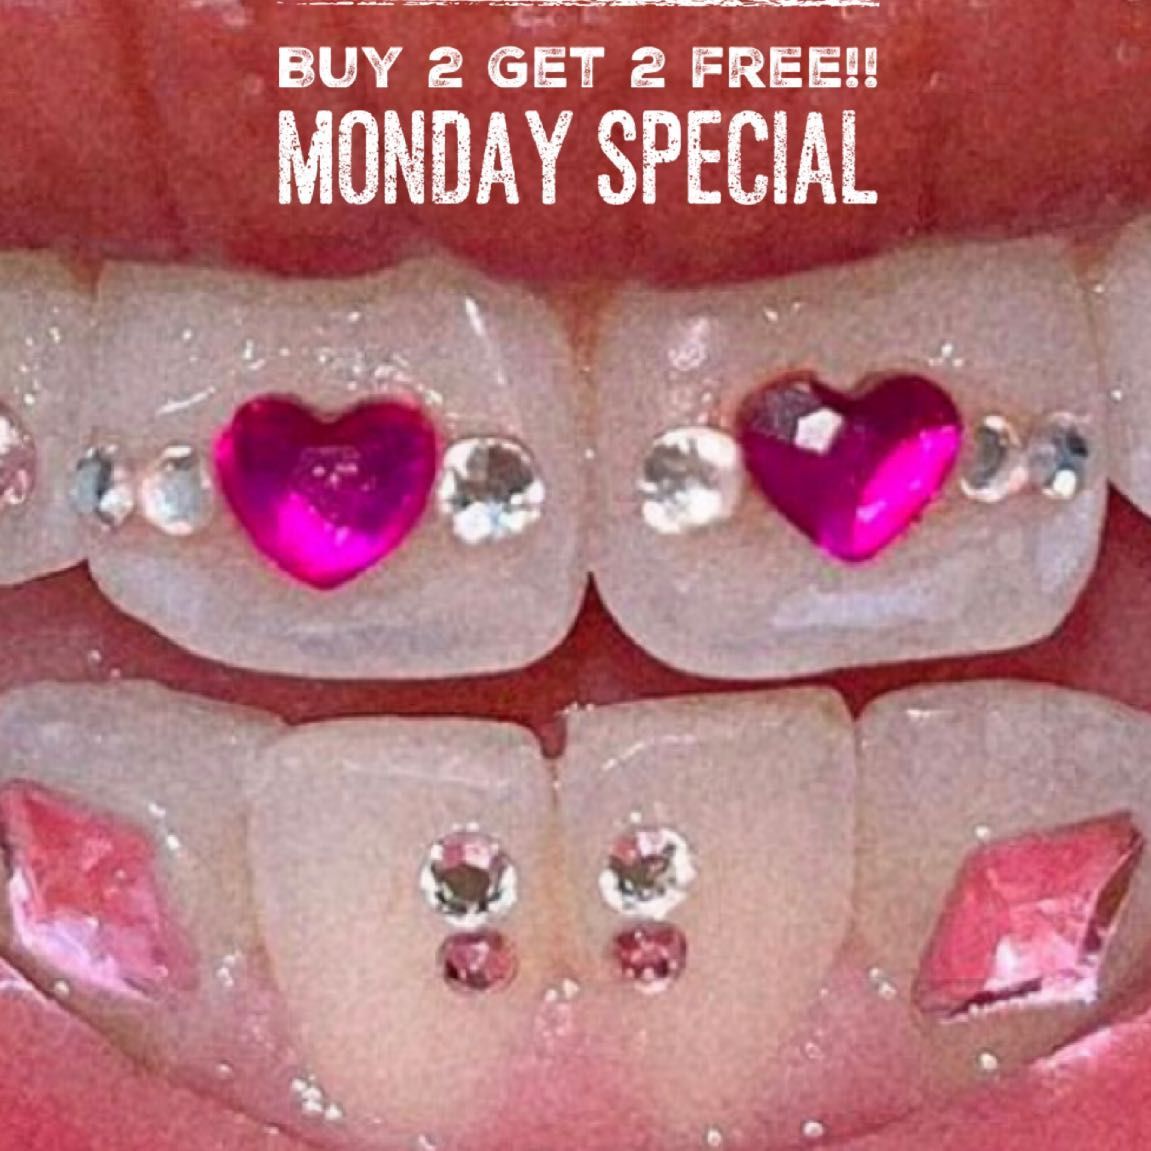 Buy 2 Tooth Gemz get 2 free Monday special portfolio